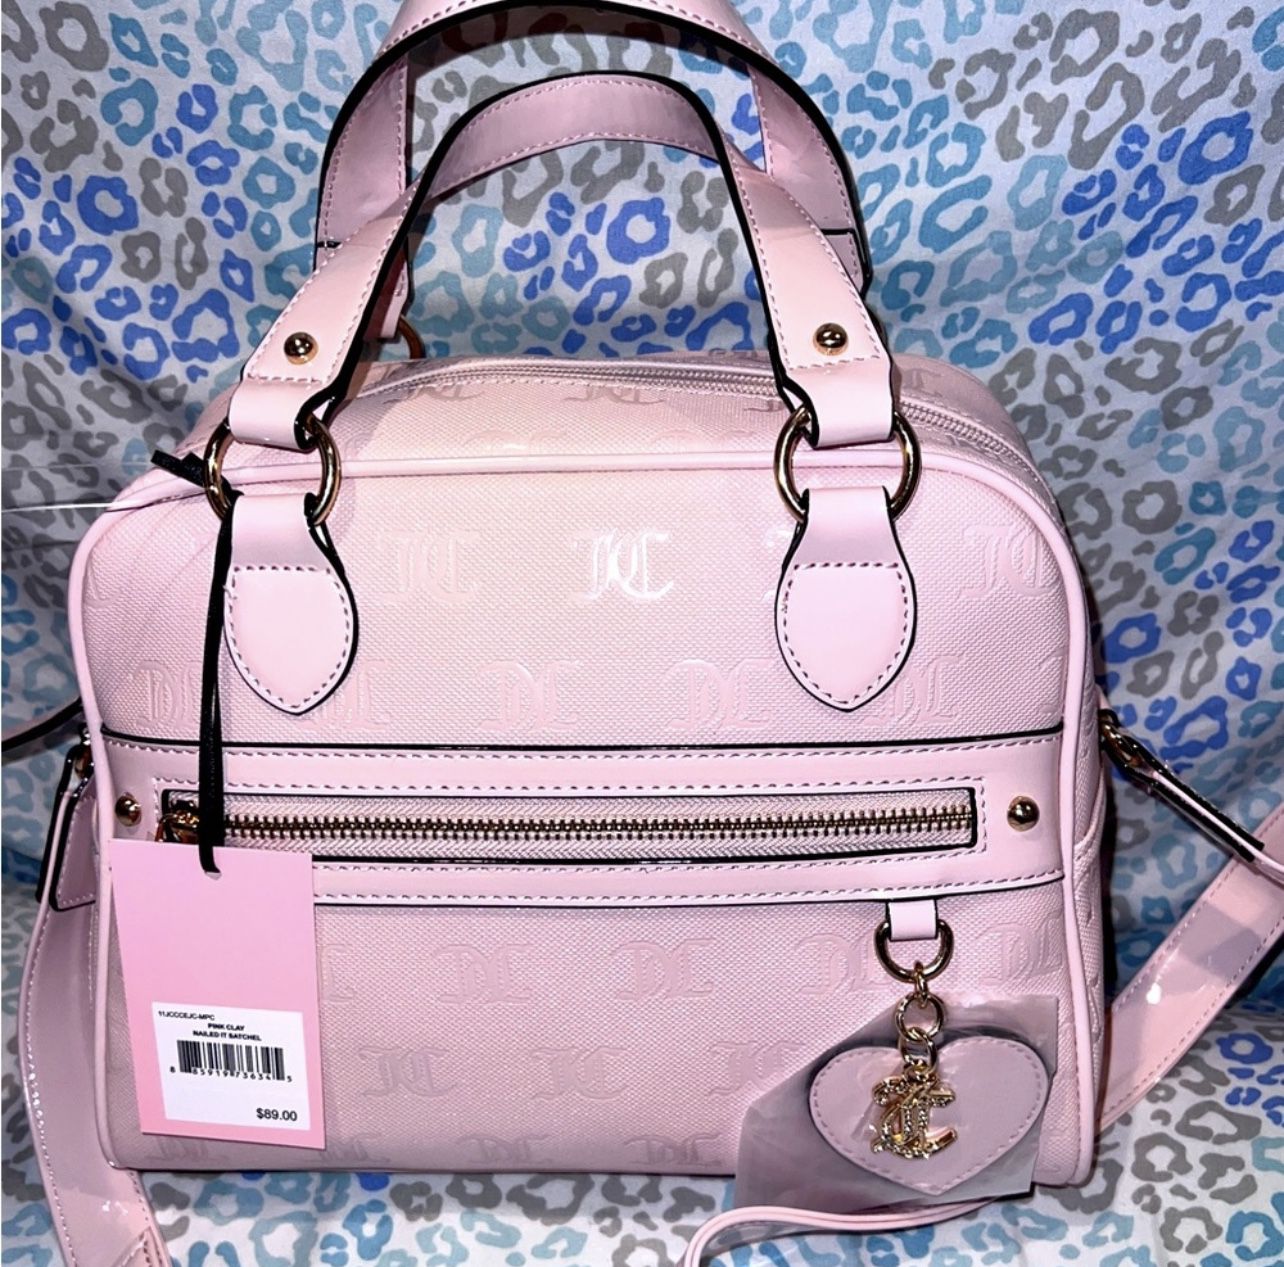 New Pink Juicy Couture Purse Handbag Satchel Bowler Bag MSRP $89 